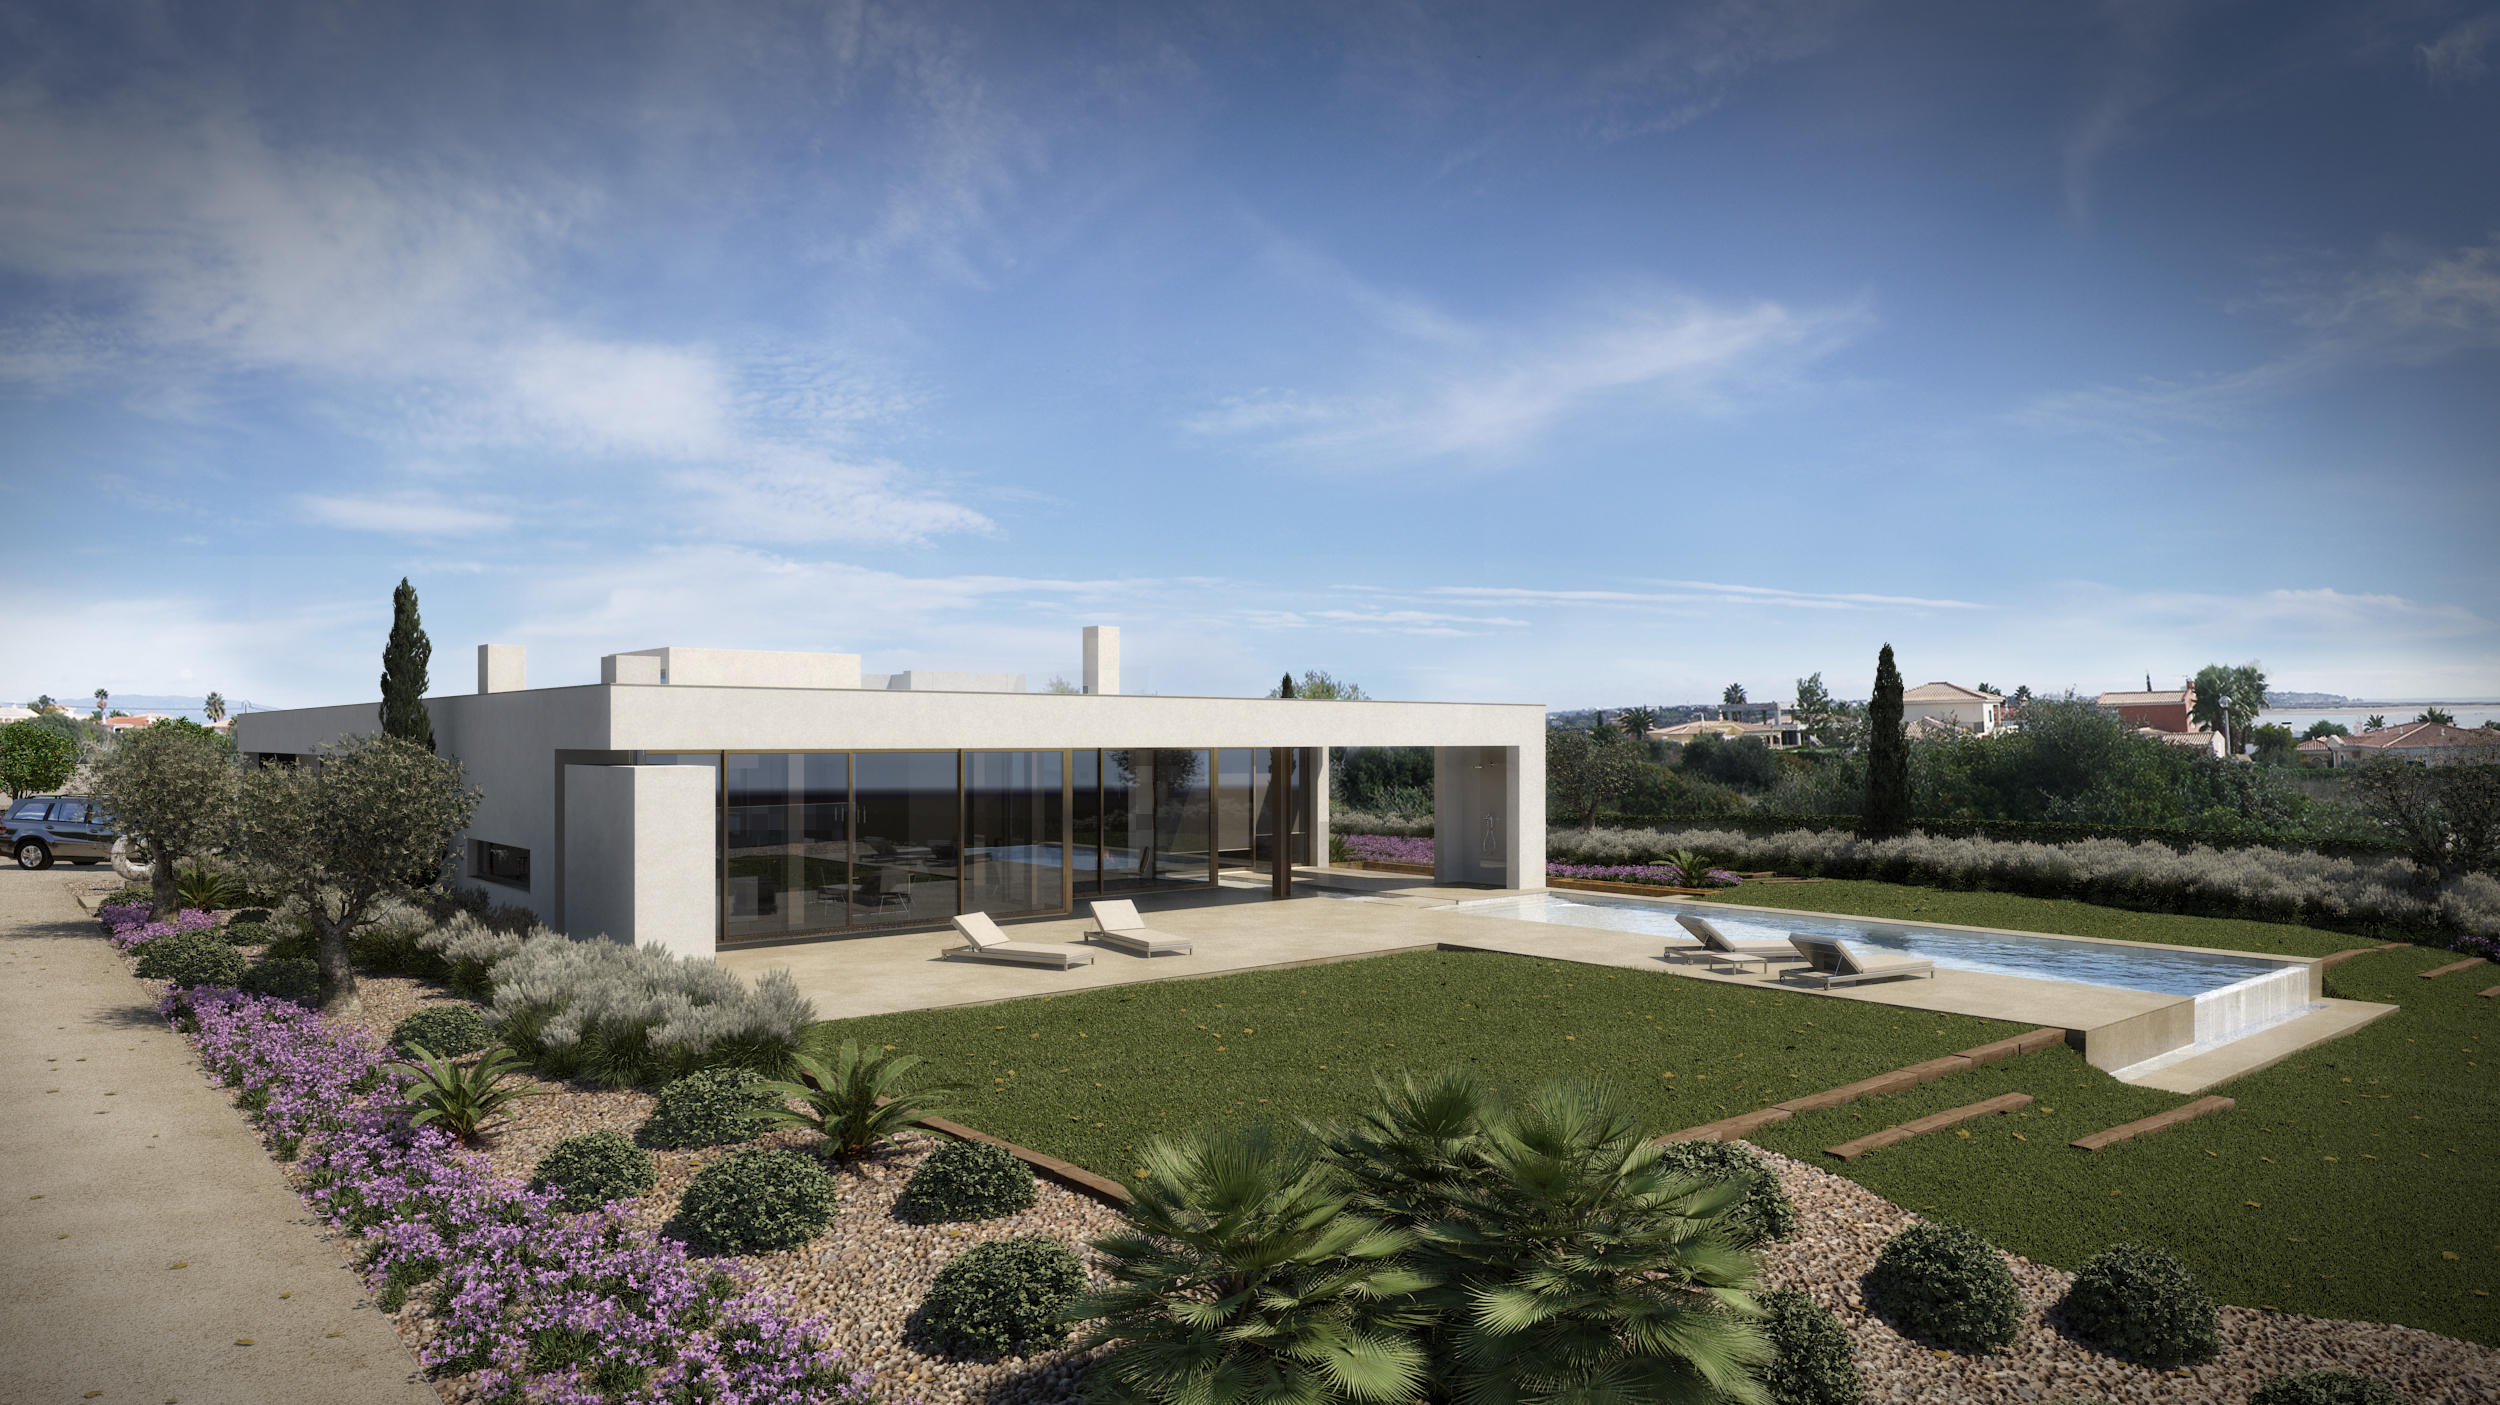 Incrível villa moderna com piscina e vistas fantásticas para o mar, perto de Lagos, Algarve Barlavento | LG1894 